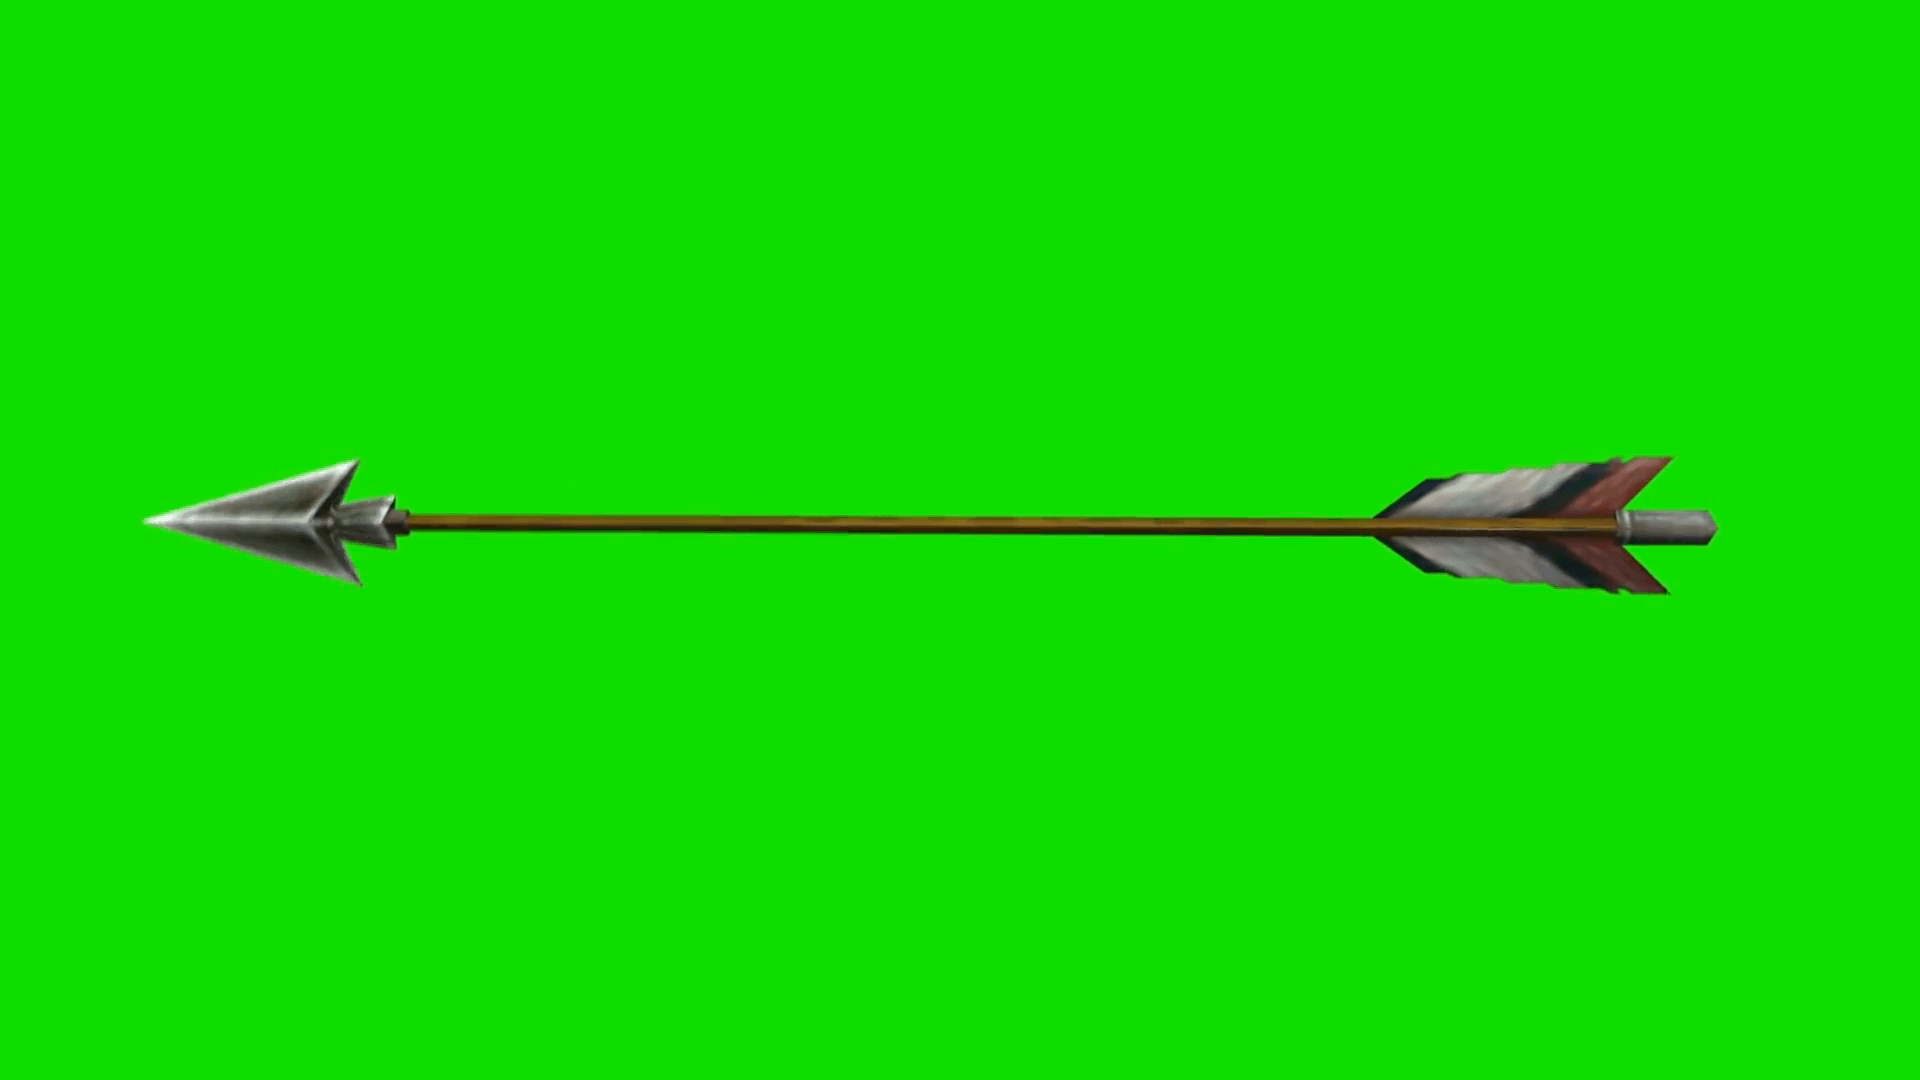 Camera Follows Flying Shooting Arrow on a Green Screen Background